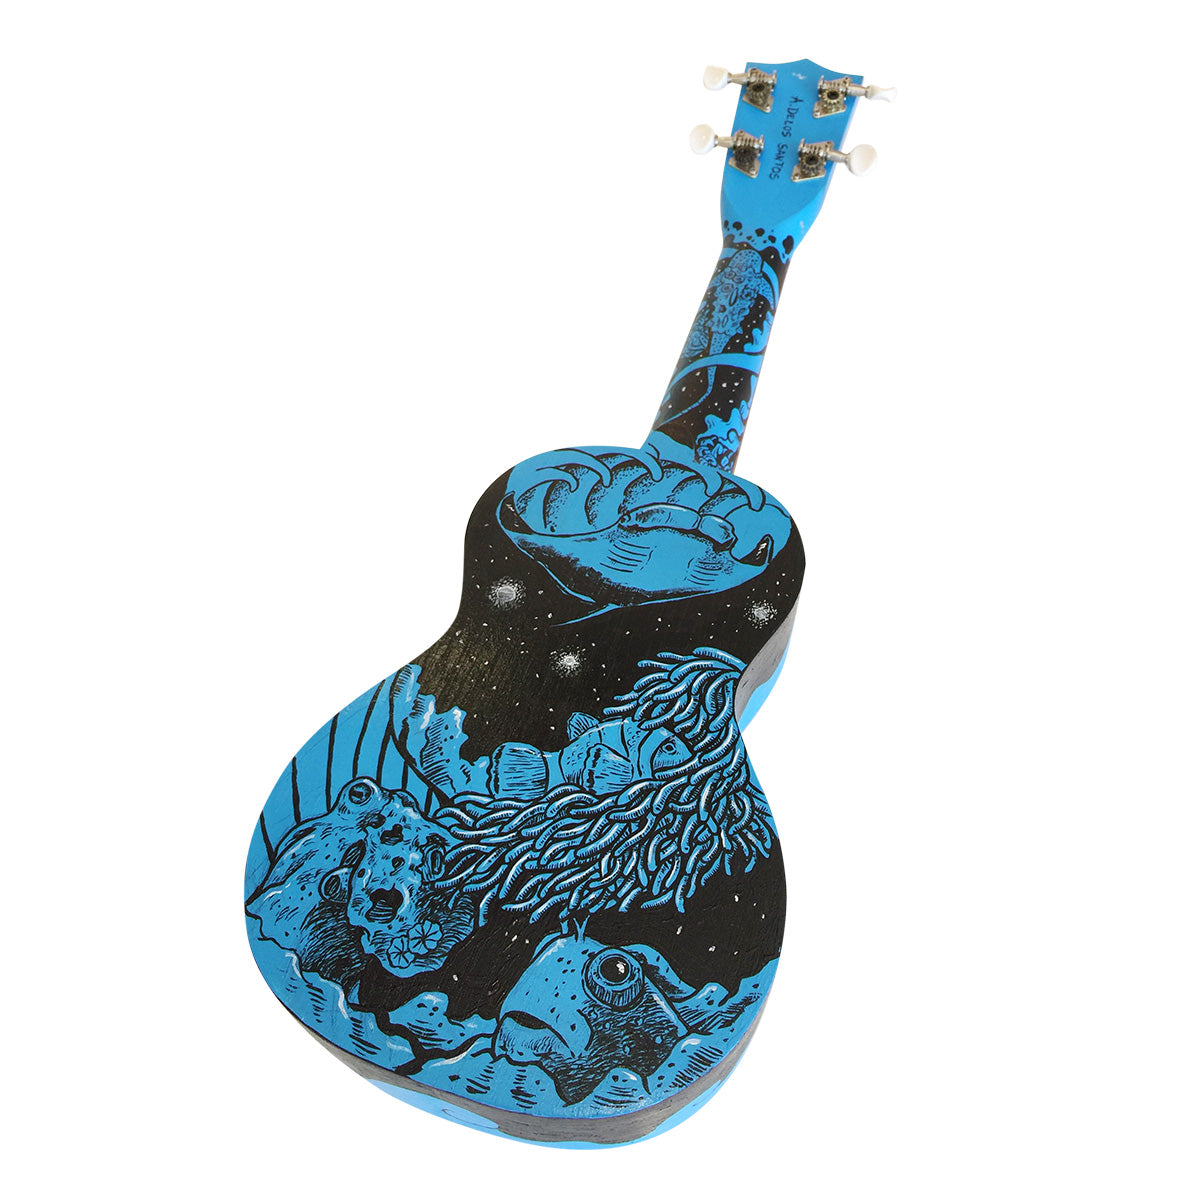 Dumaguete city Cebu crafted guitar ukulele art artwork Angelo Delos Santos Philippines artist Blue Ocean Coral Reef